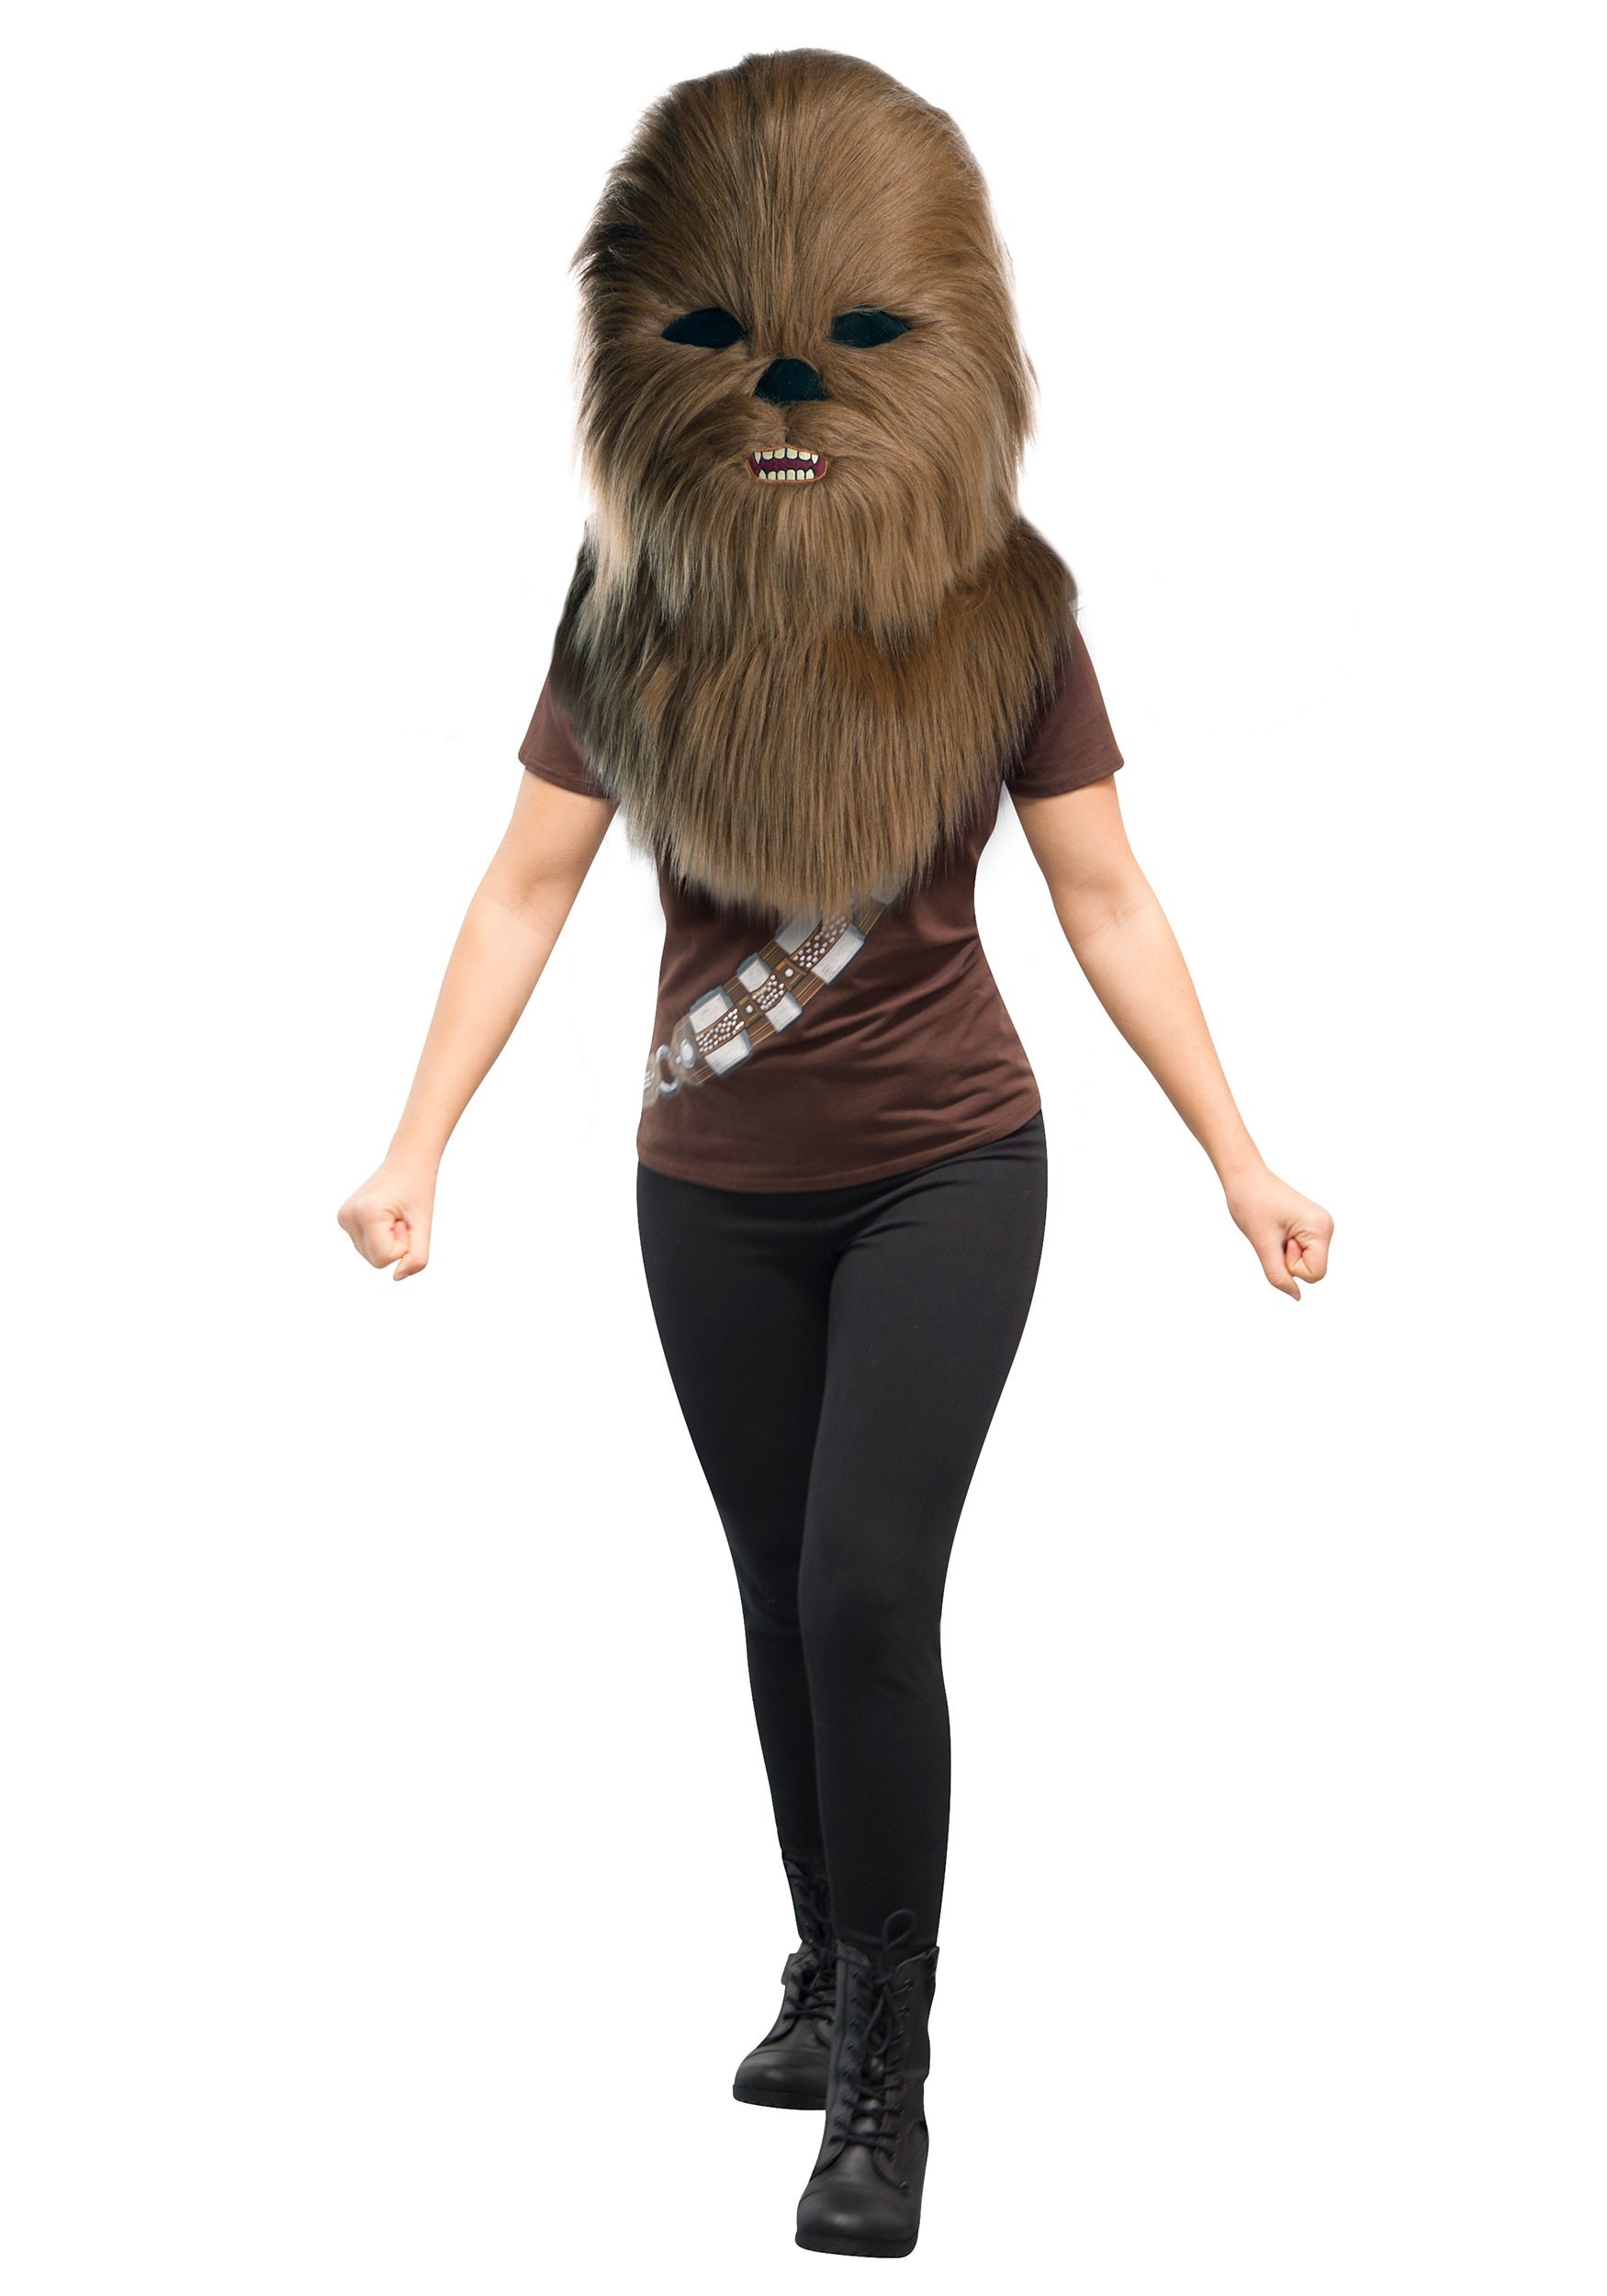 Star Wars Oversized Chewbacca Mascot Head